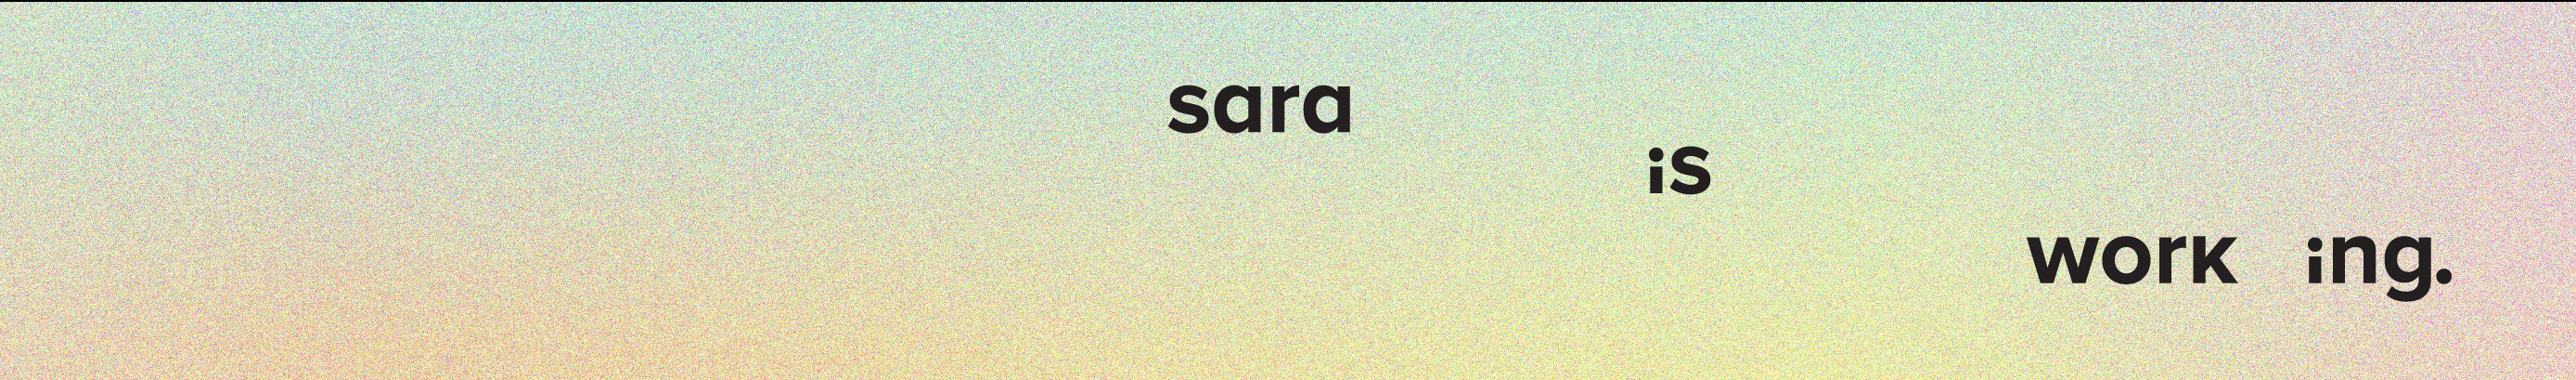 Banner profilu uživatele sara is working.